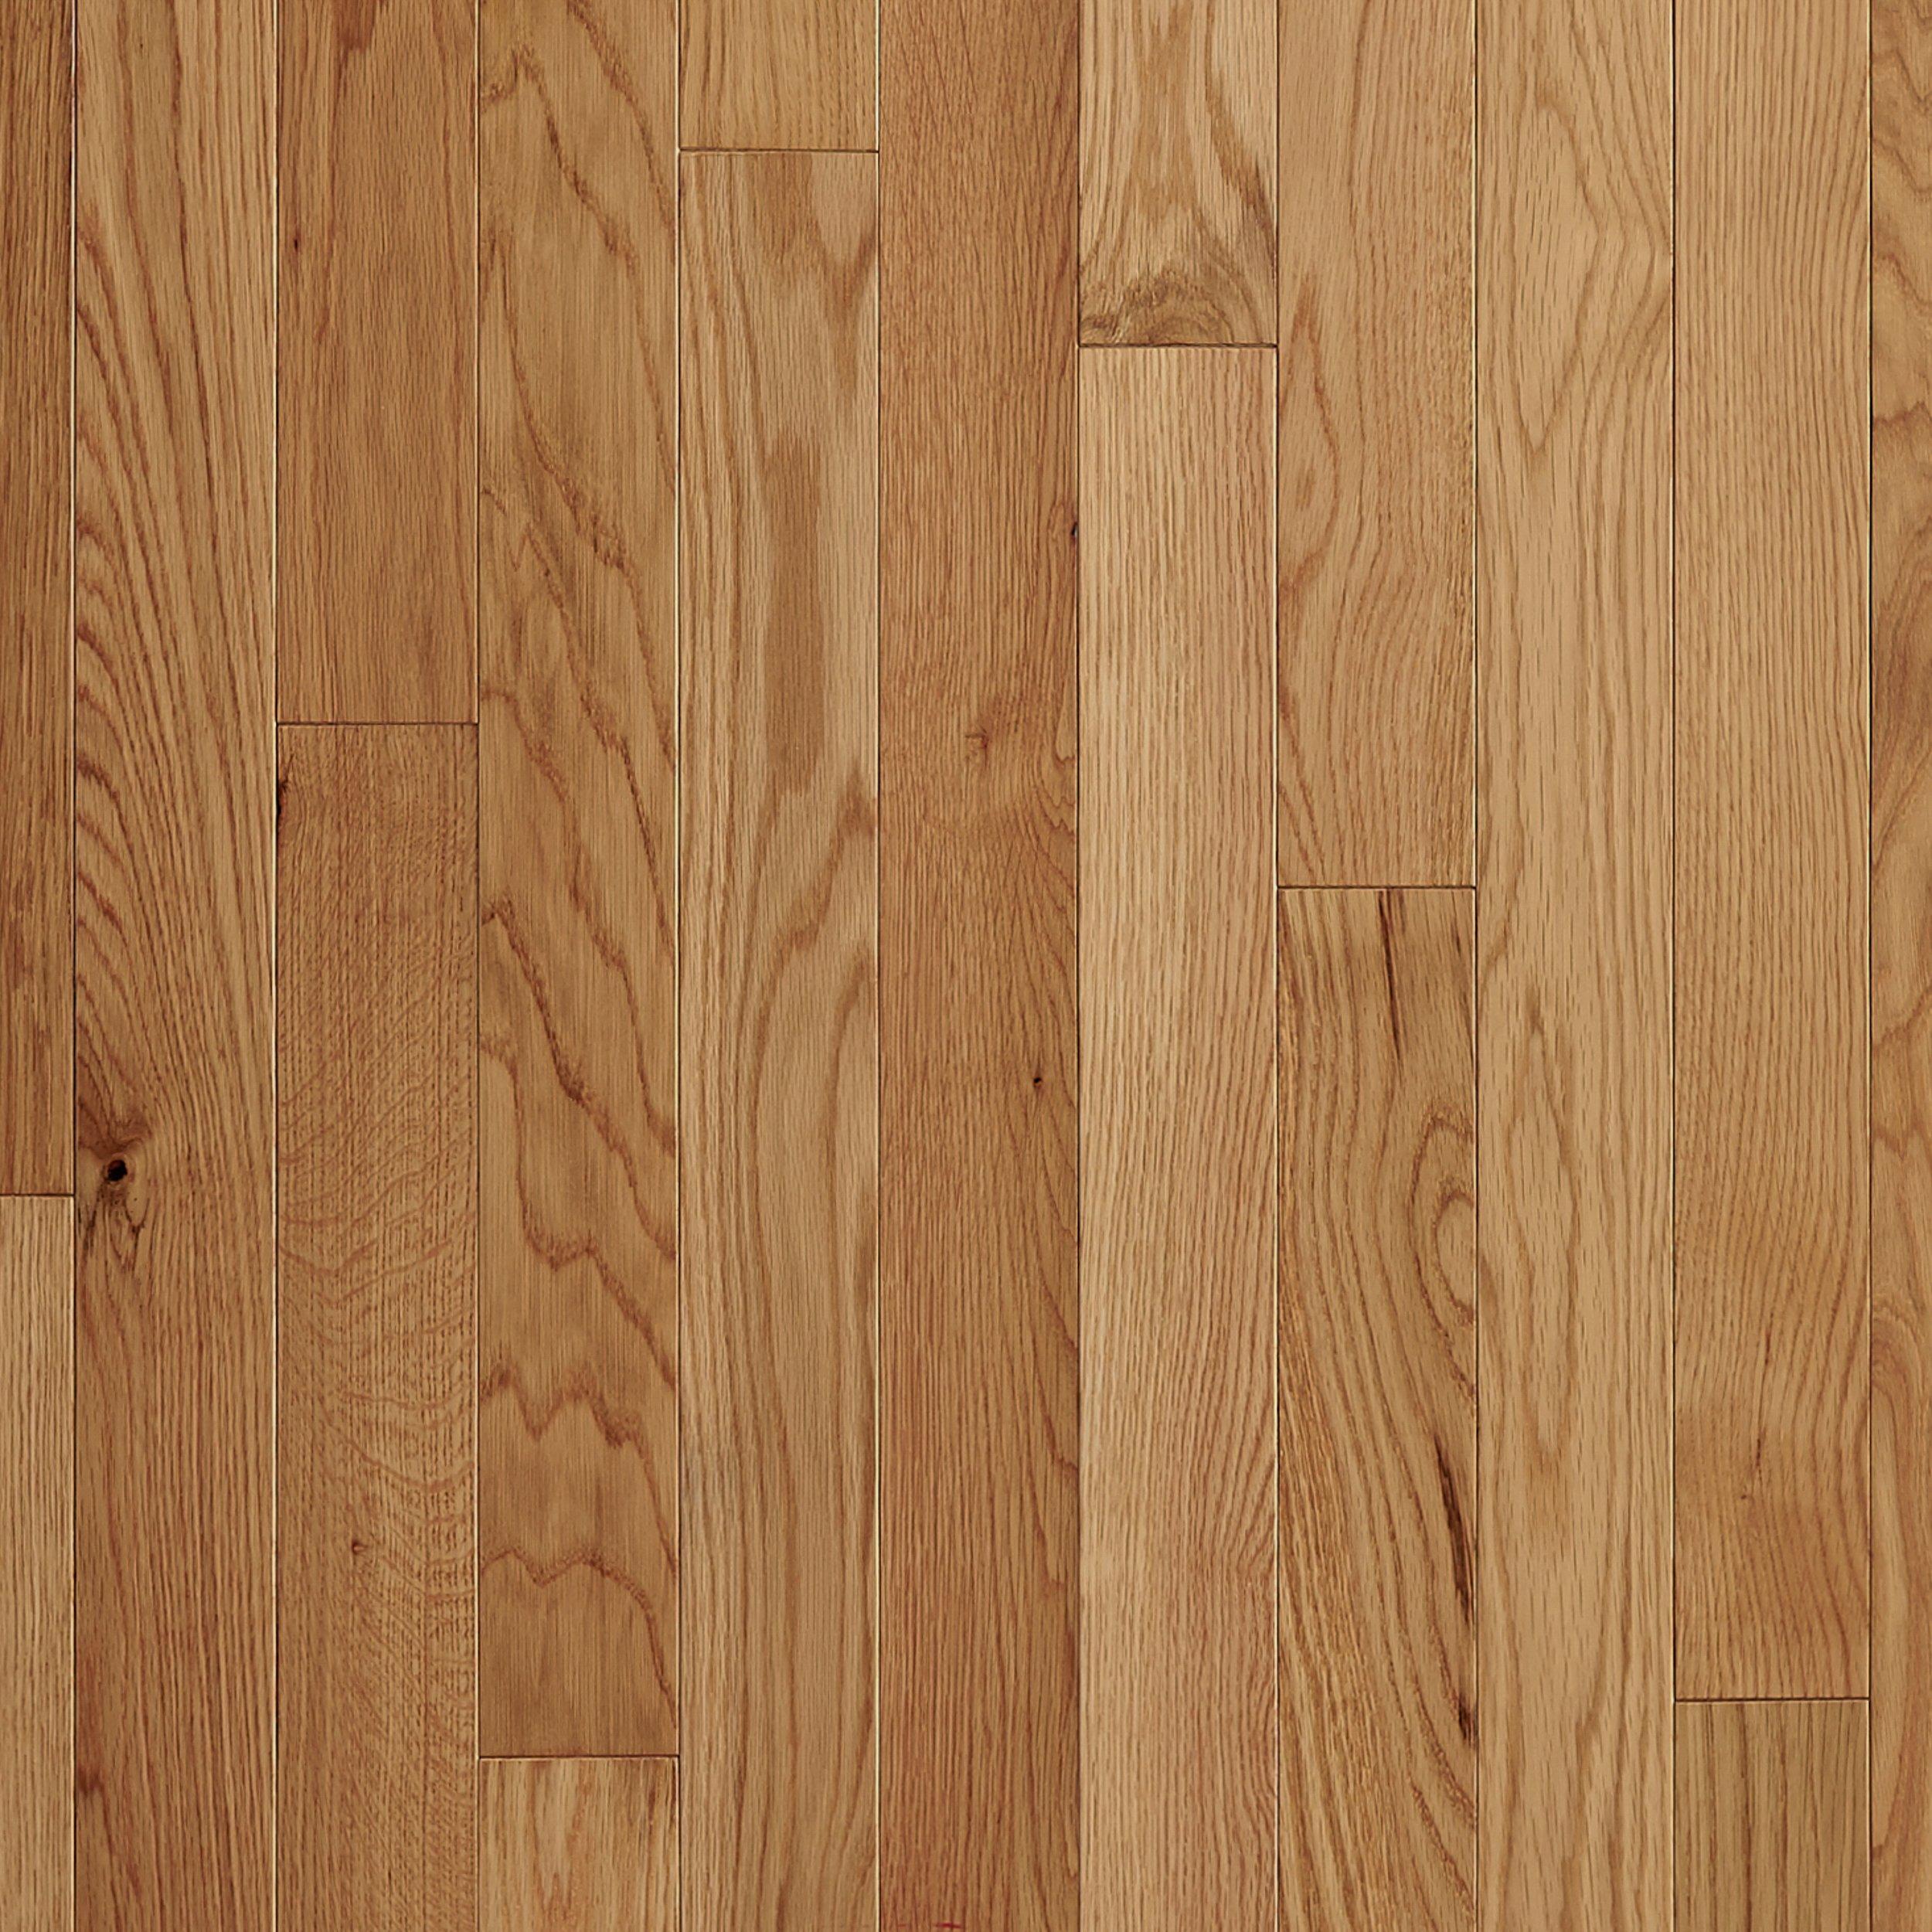 Natural White Oak Smooth Solid Hardwood